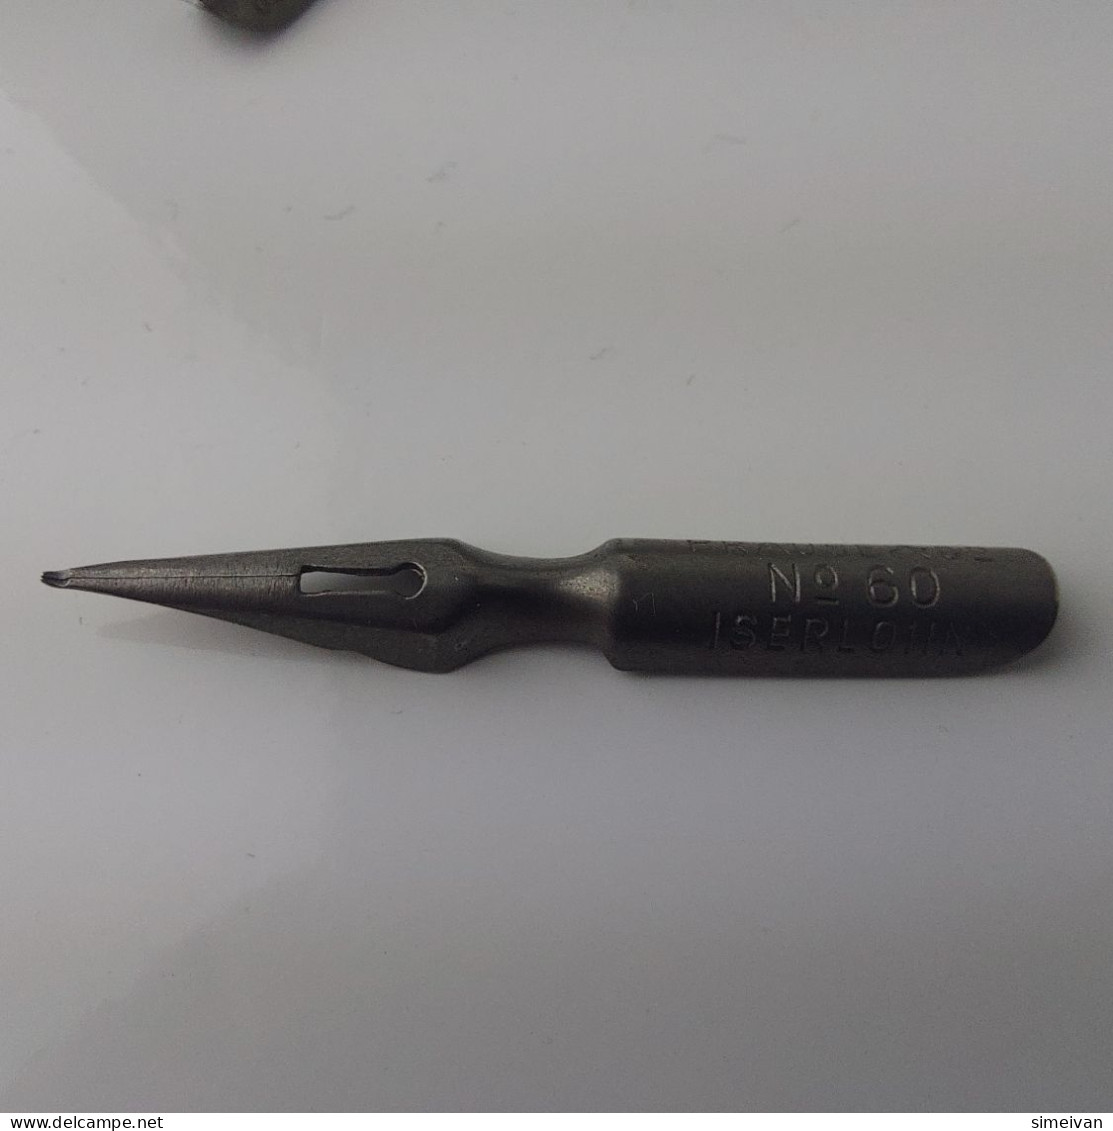 Vintage Dip Pen Nibs BRAUSE & Co No. 60 ISERLOHN Feder 16 Pcs Calligraphy #5563 - Penne